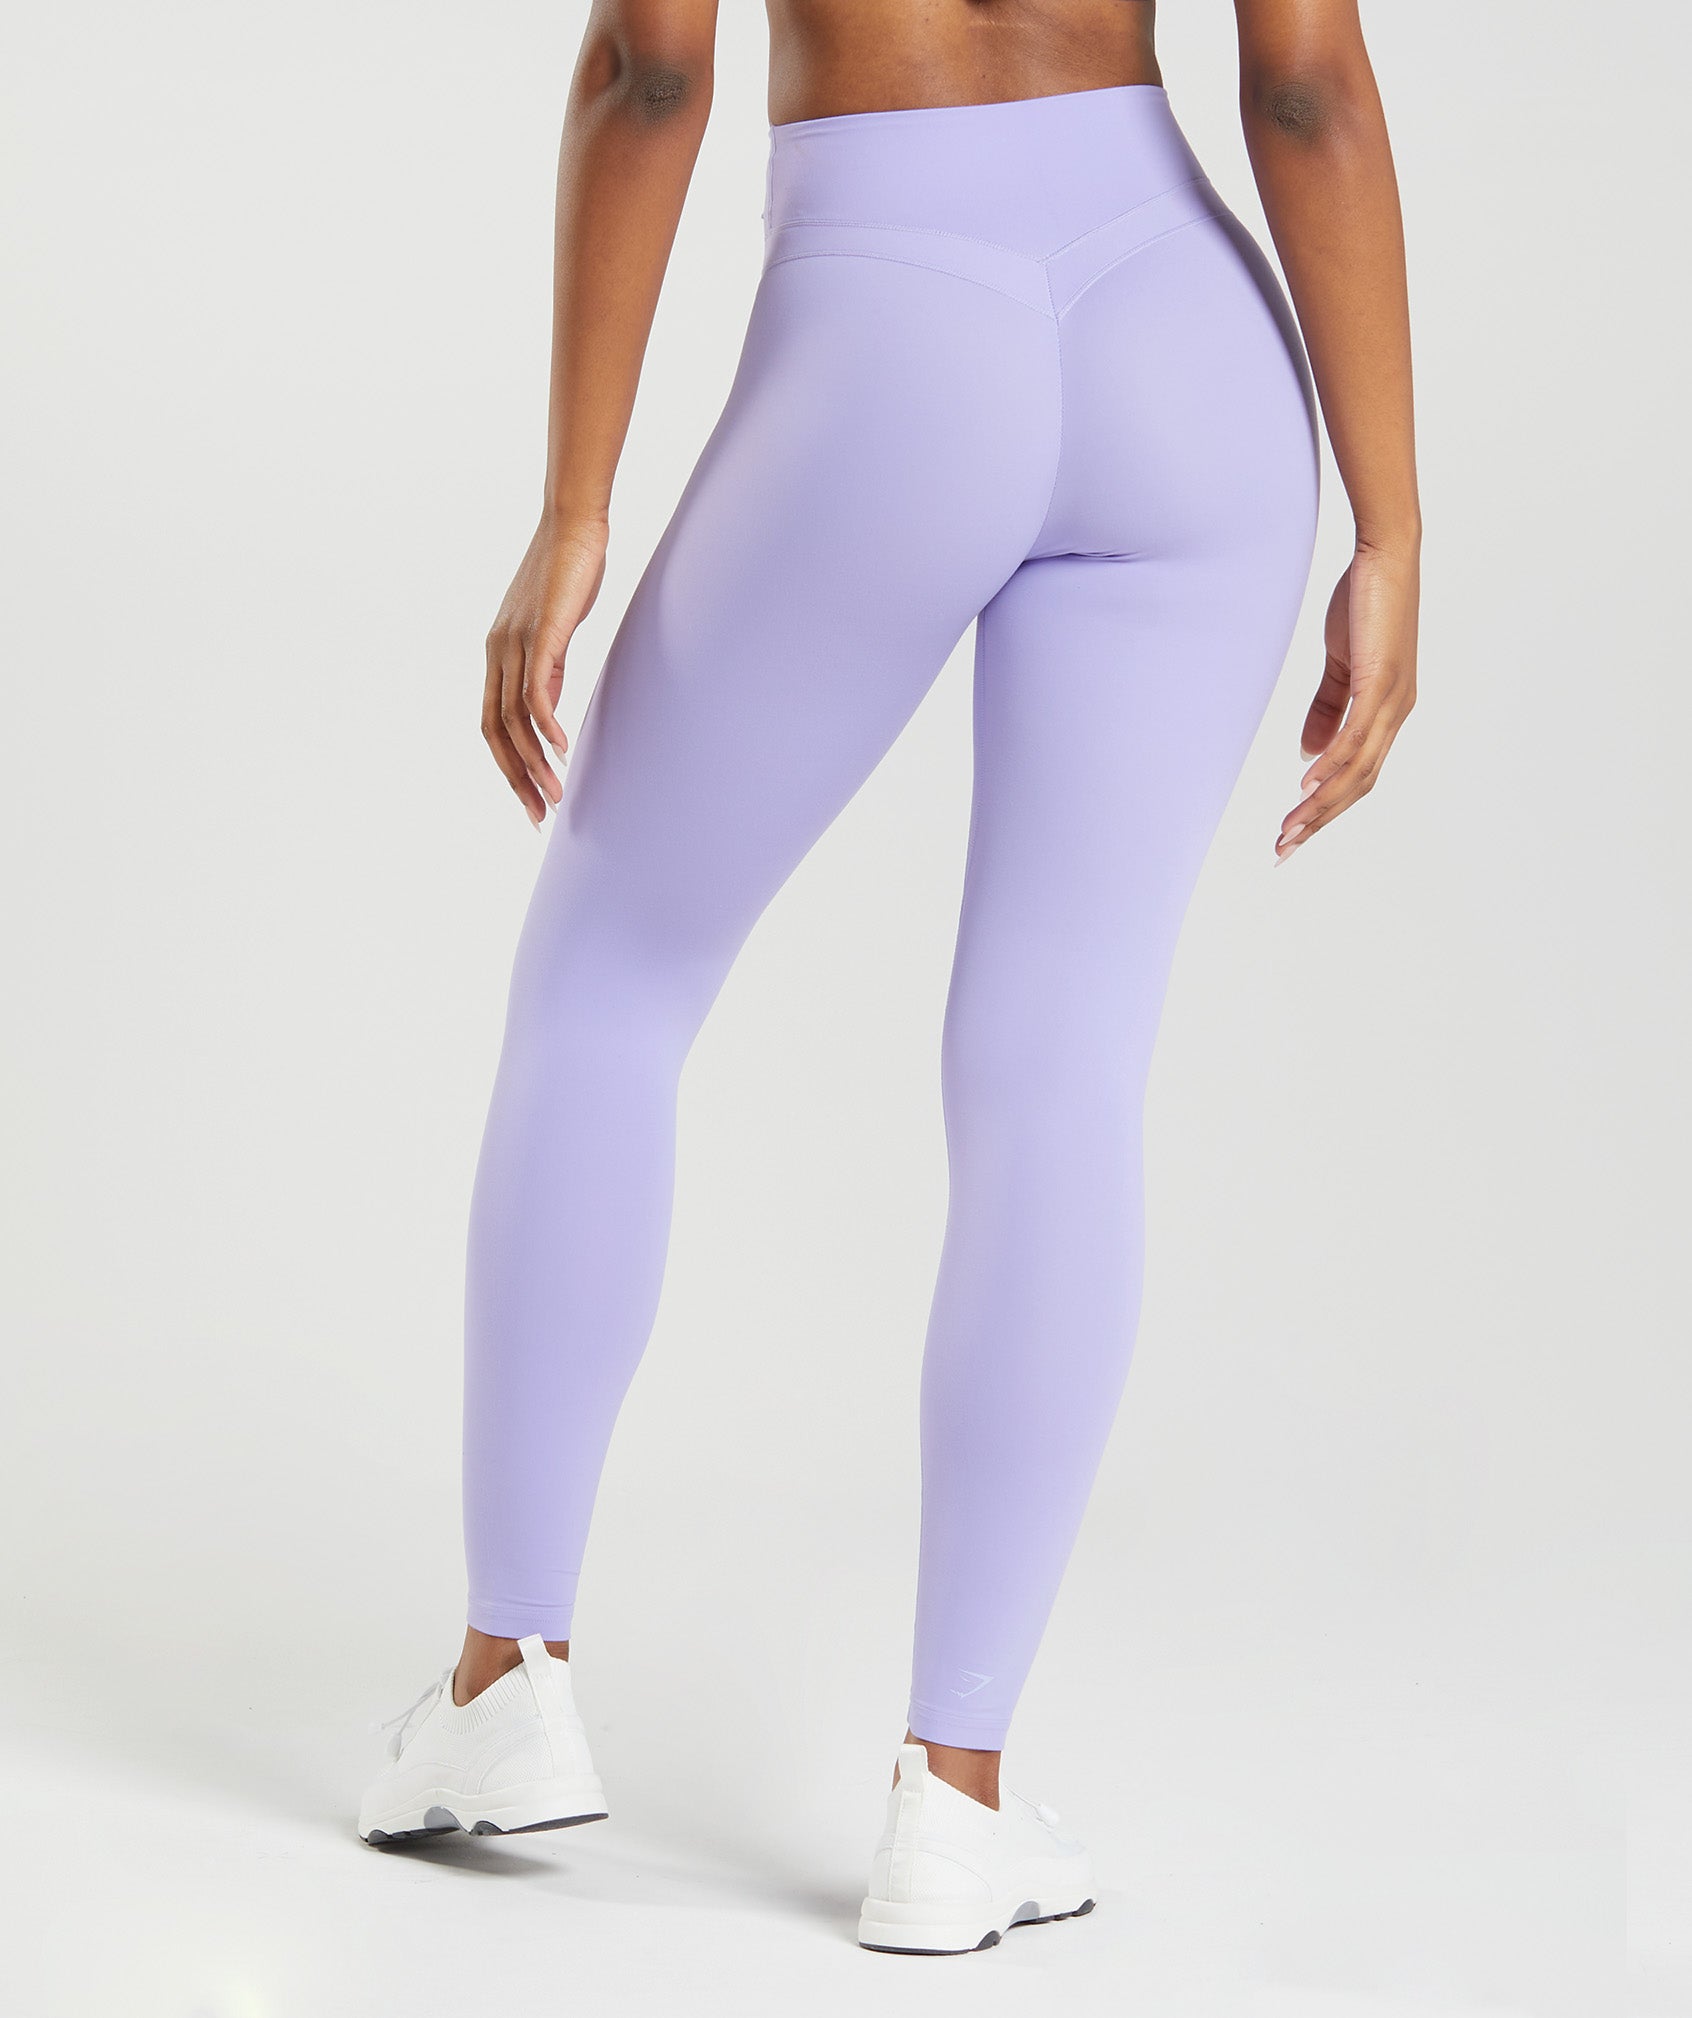 Gymshark Leggings XS Purple Marl - $31 (38% Off Retail) - From Robin